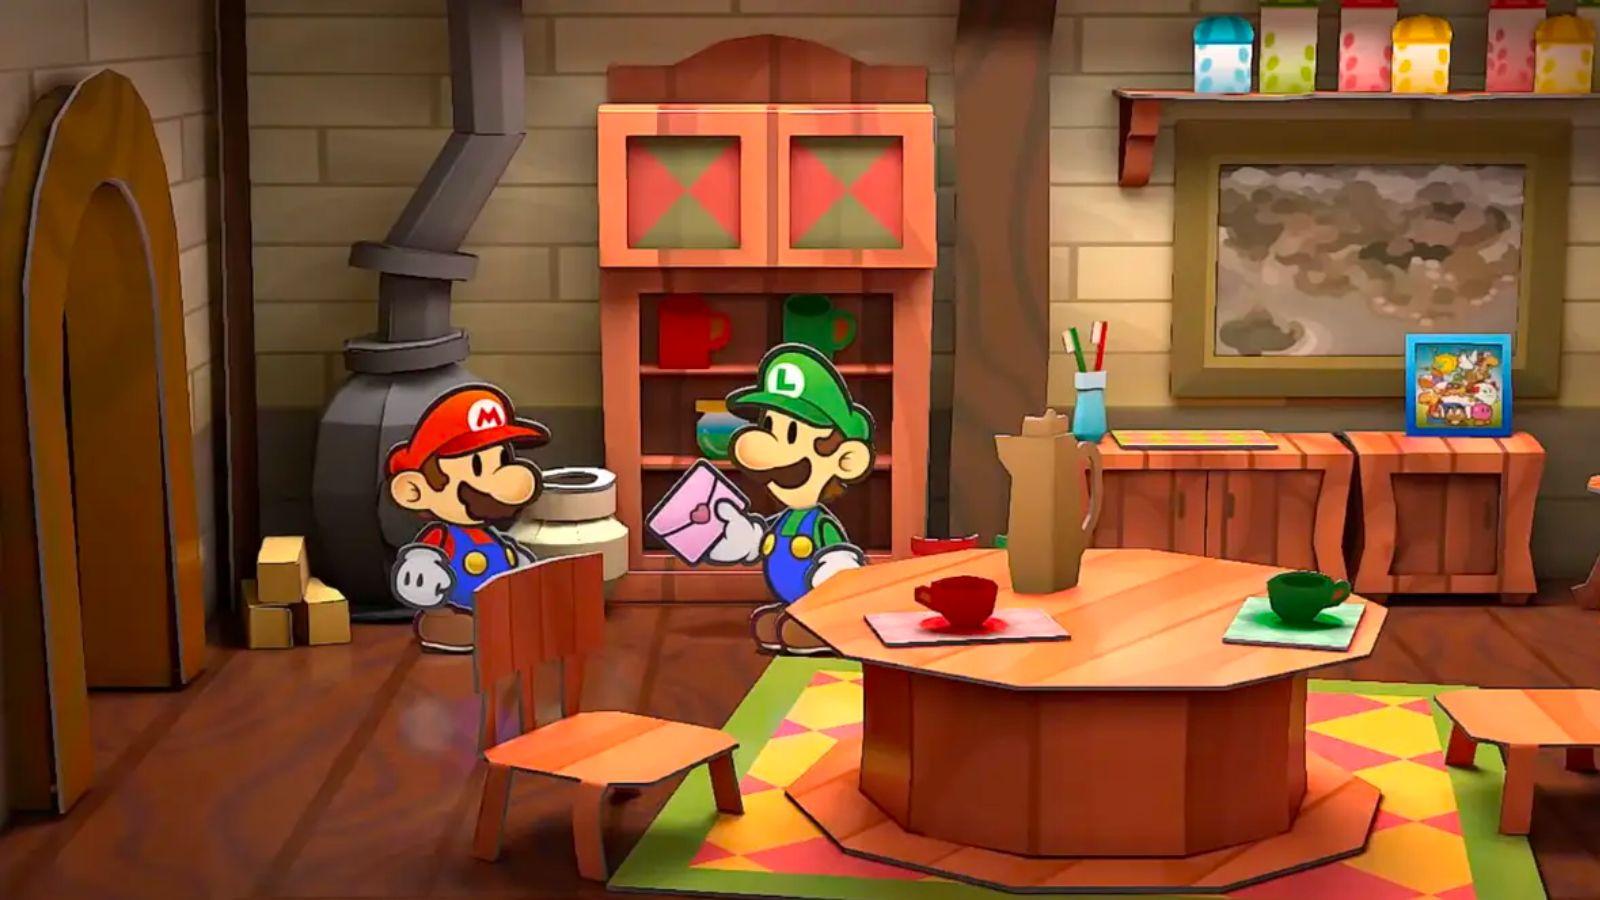 Paper Mario Thousand Year Door remake announced